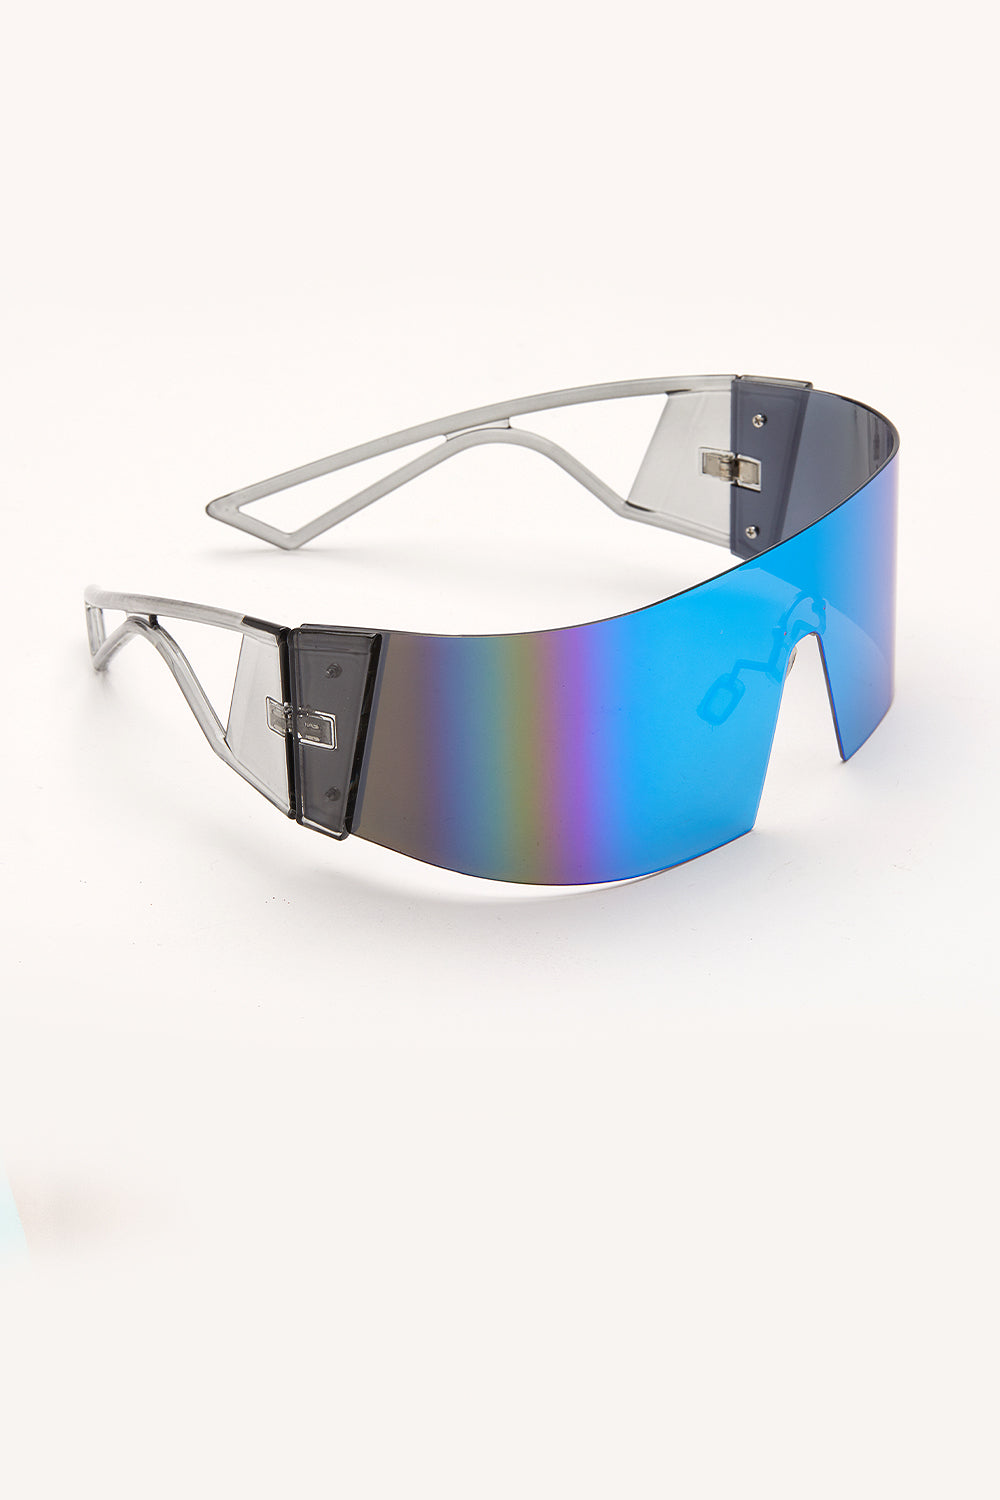 The Futurist Sunglasses - Slick It Up 